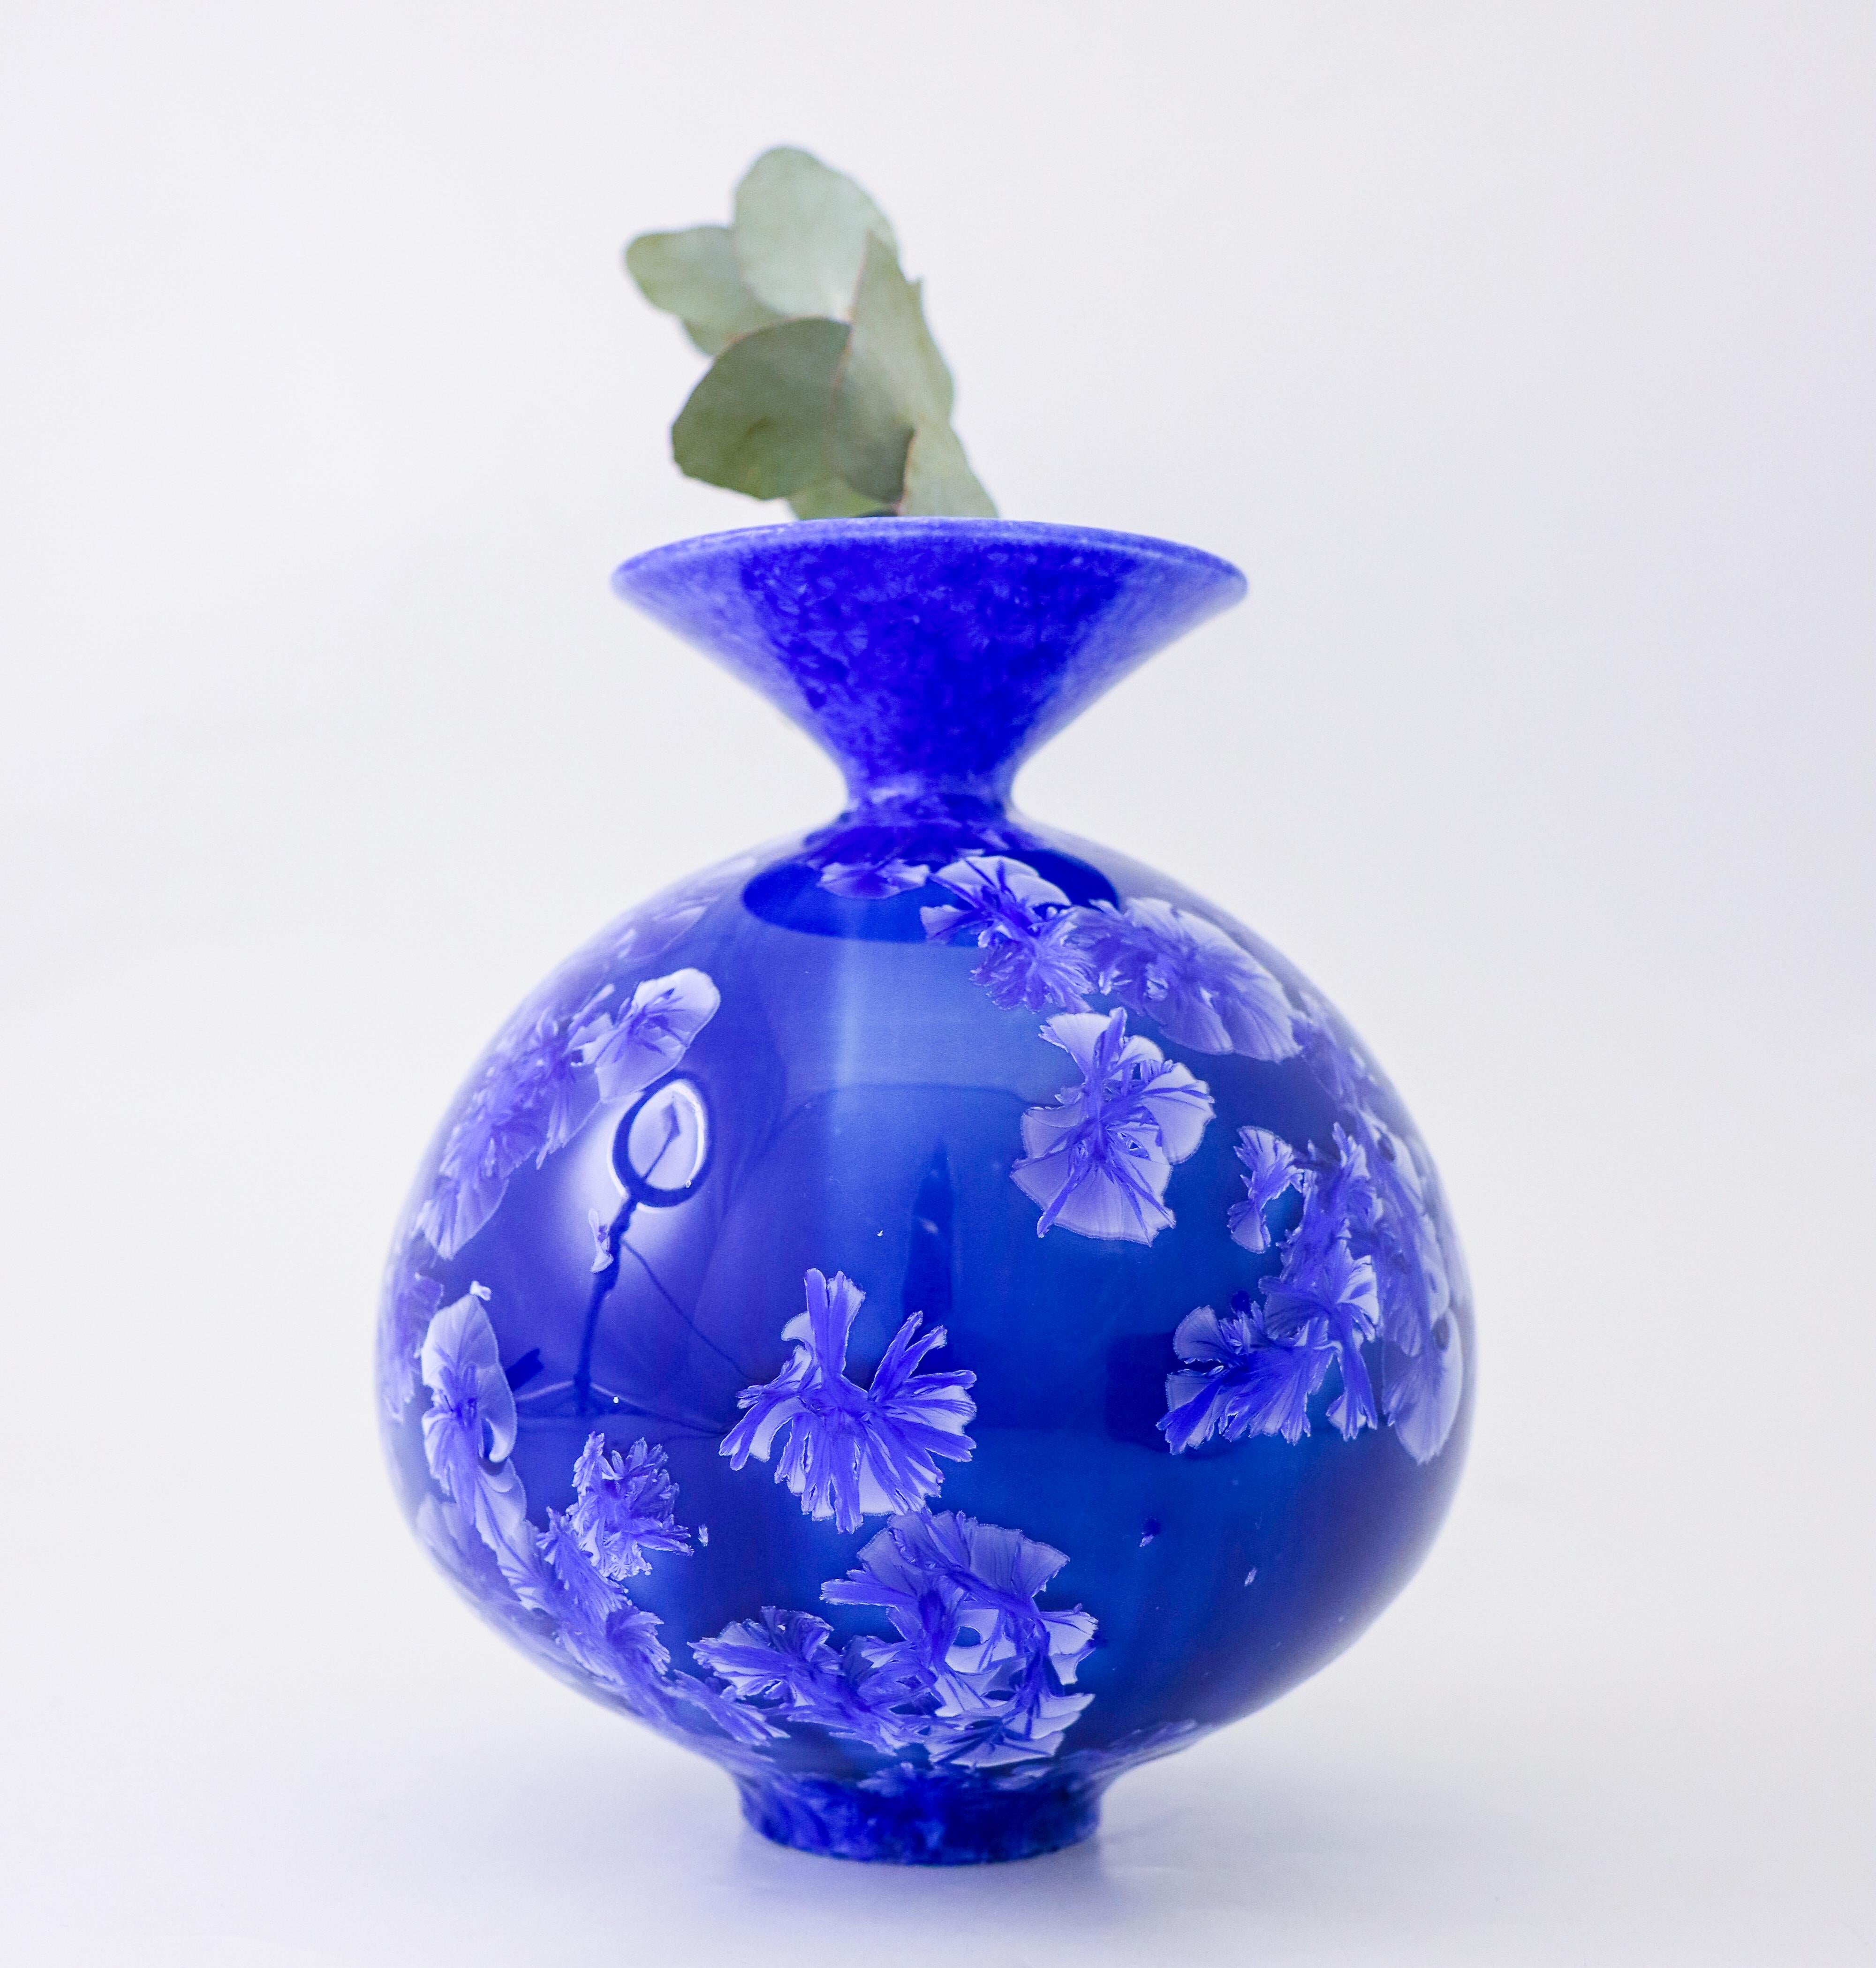 Scandinavian Modern Isak Isaksson Blue Ceramic Vase Crystalline Glaze Contemporary Artist For Sale